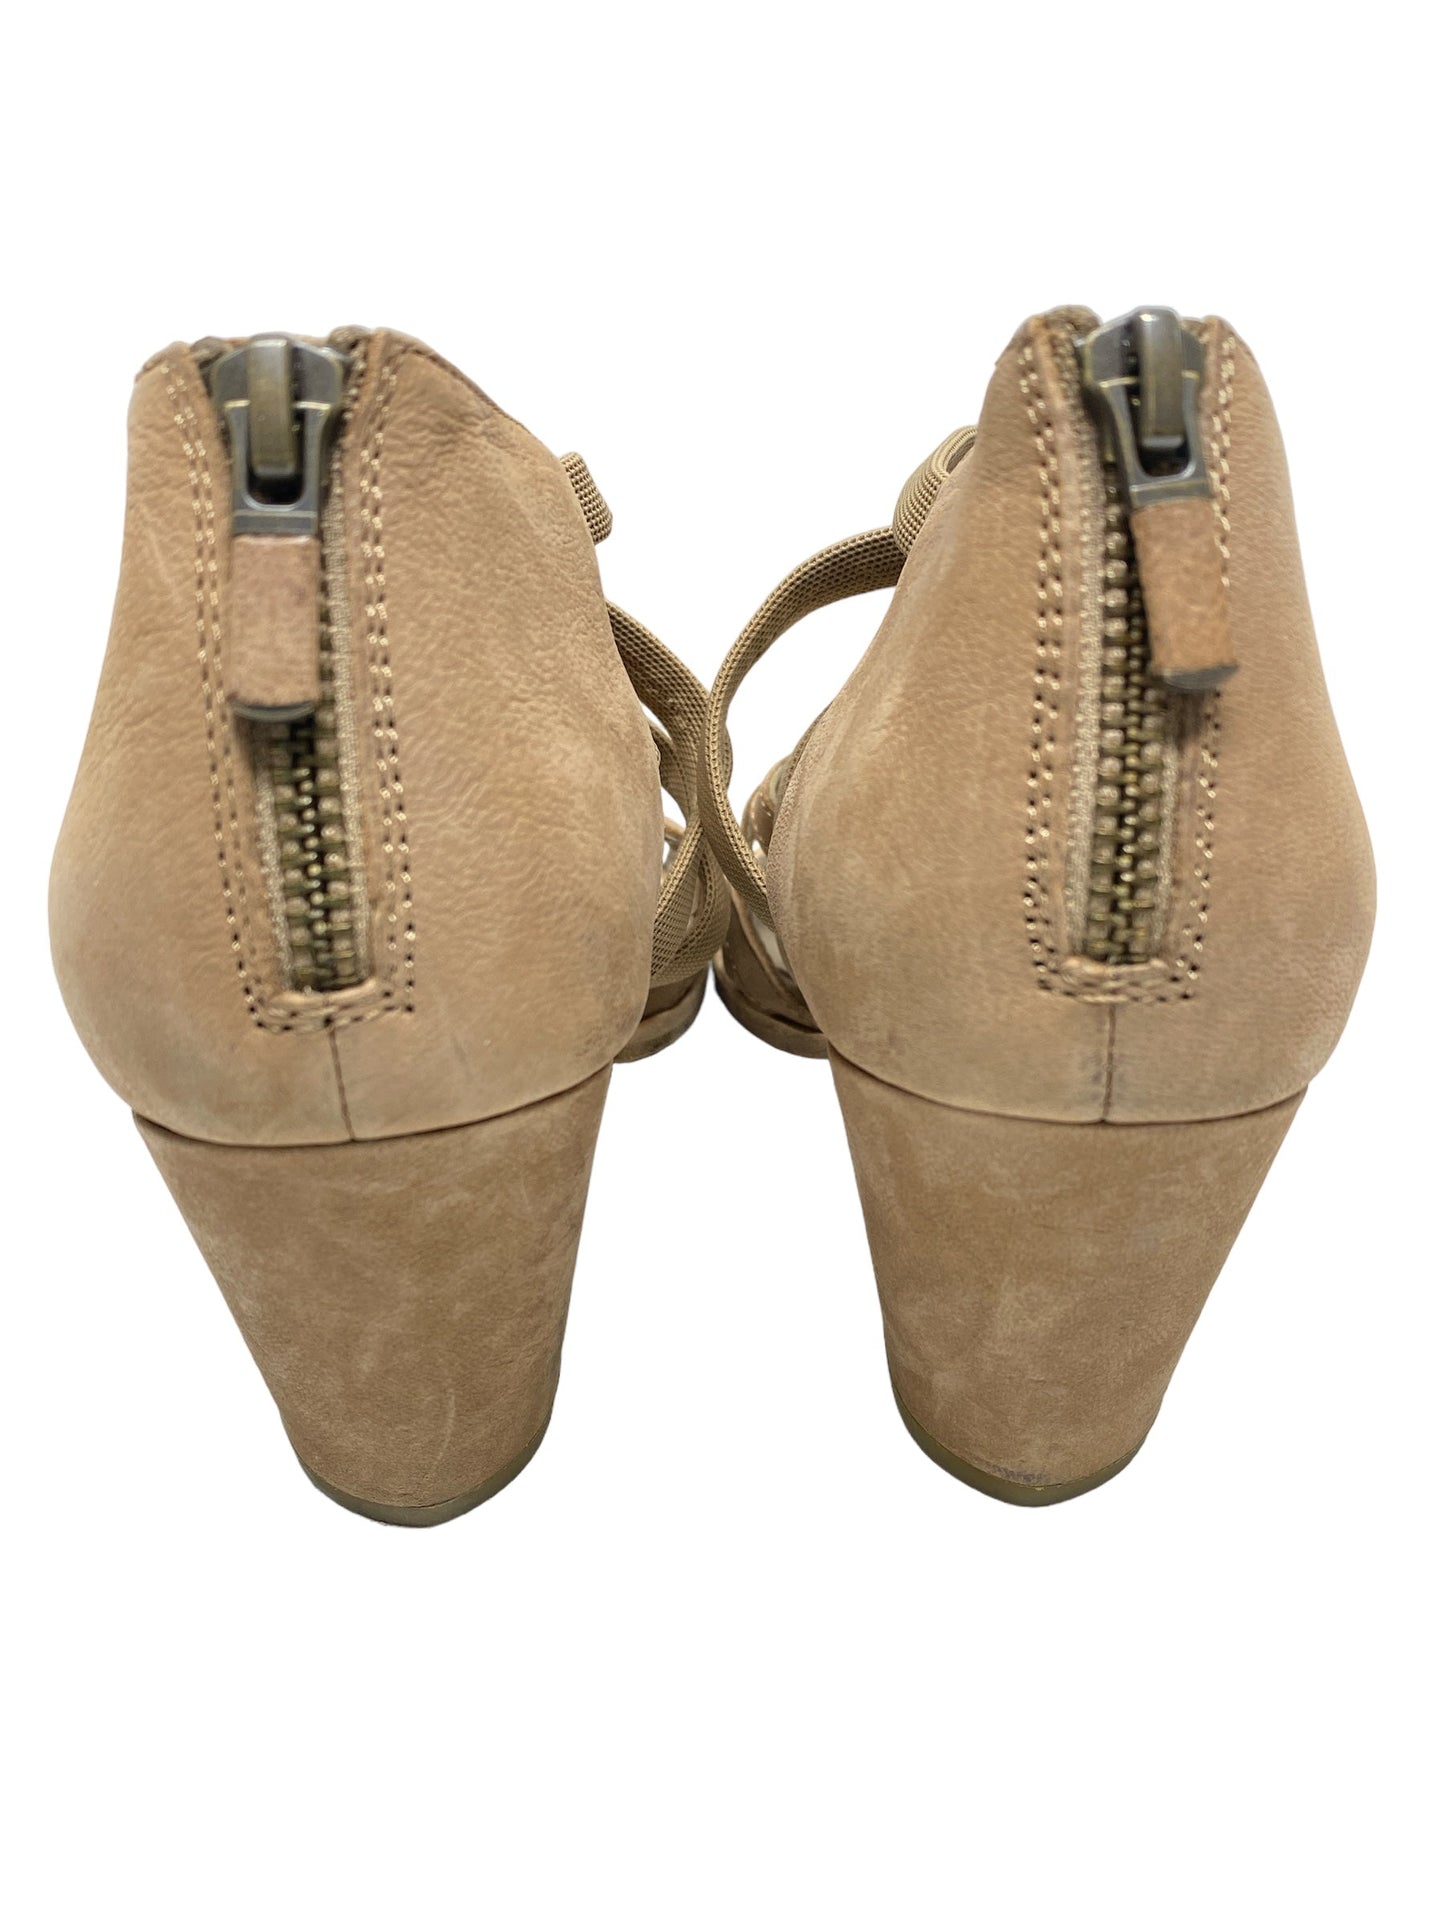 Sandals Heels Block By Eileen Fisher  Size: 7.5